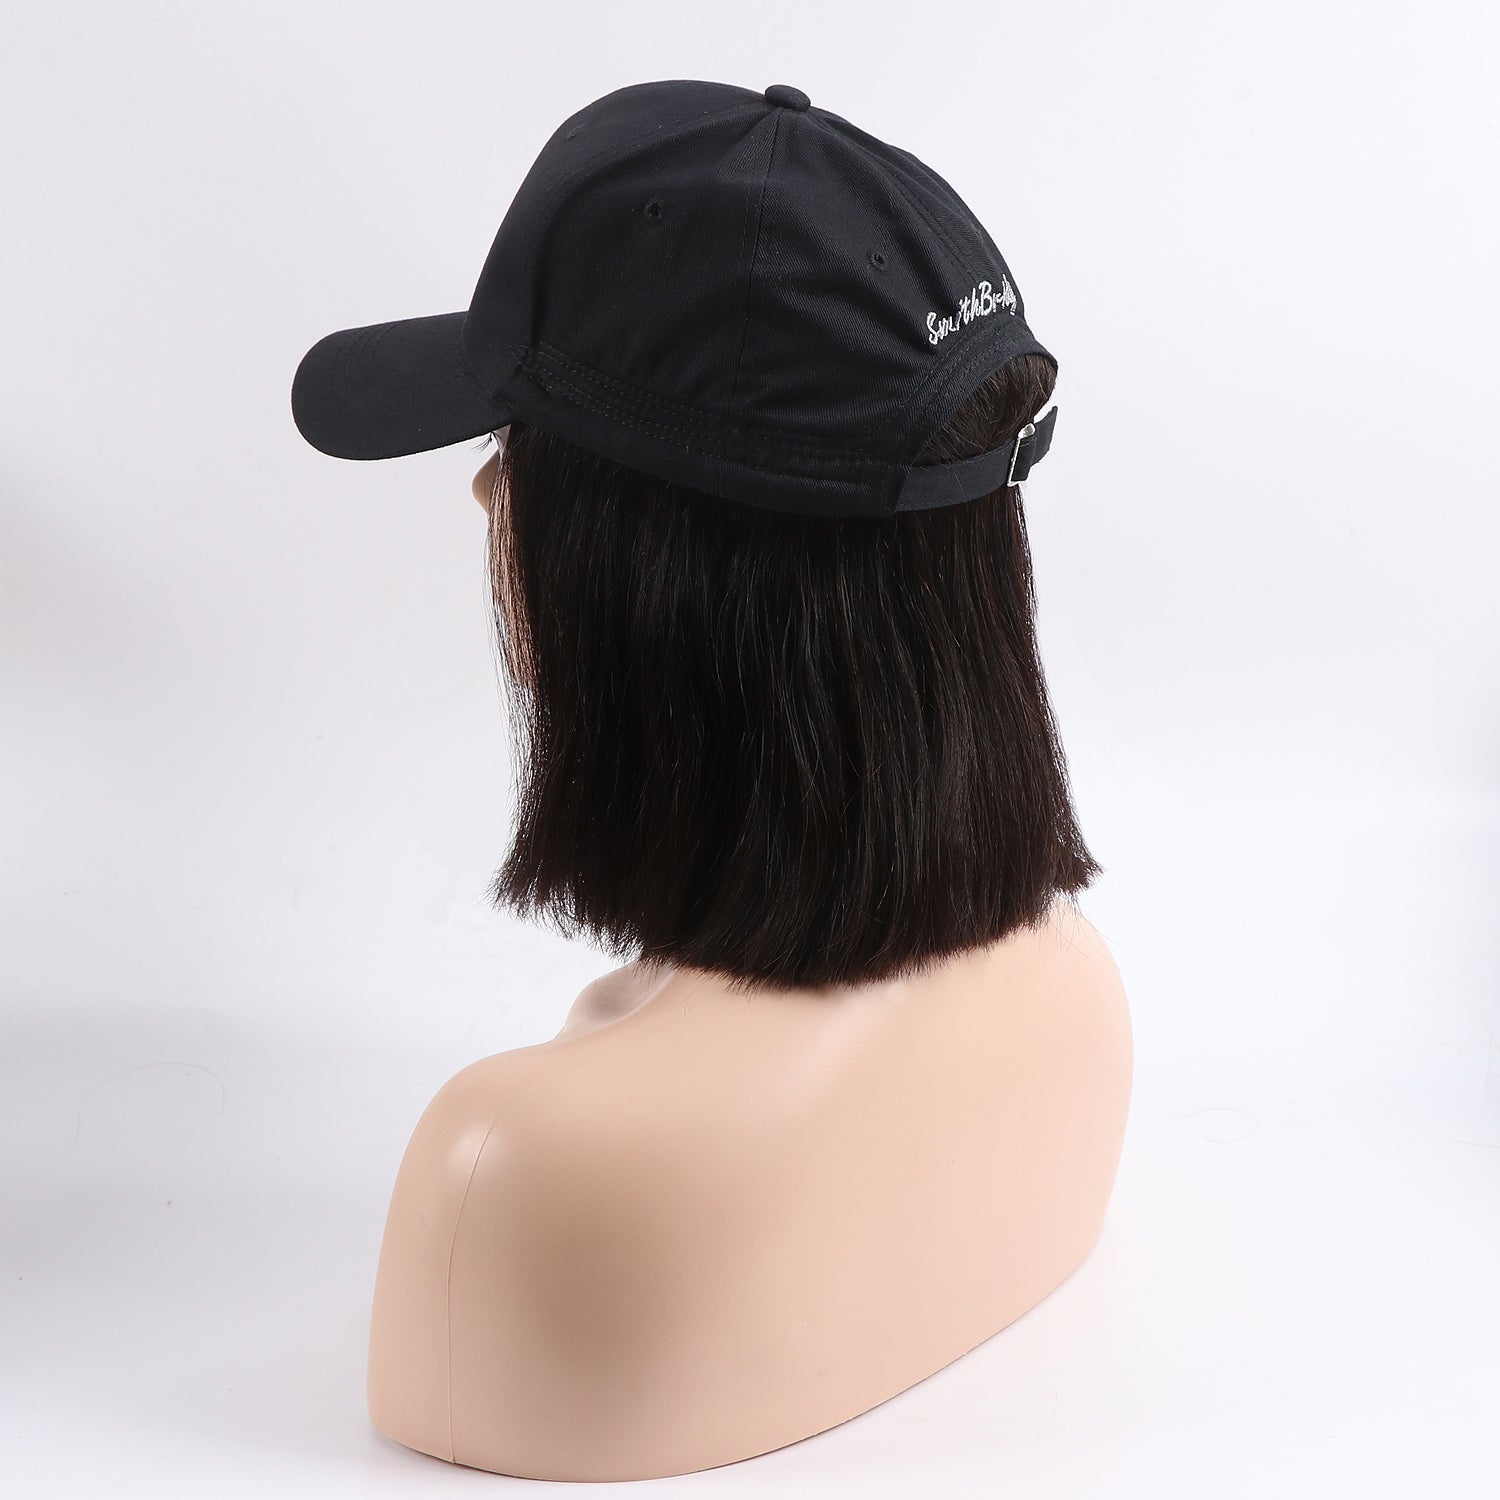 RoseHair Baseball Cap Hair Wig Natural Black Super Easy Affordable Human Hair Wig - Rose Hair